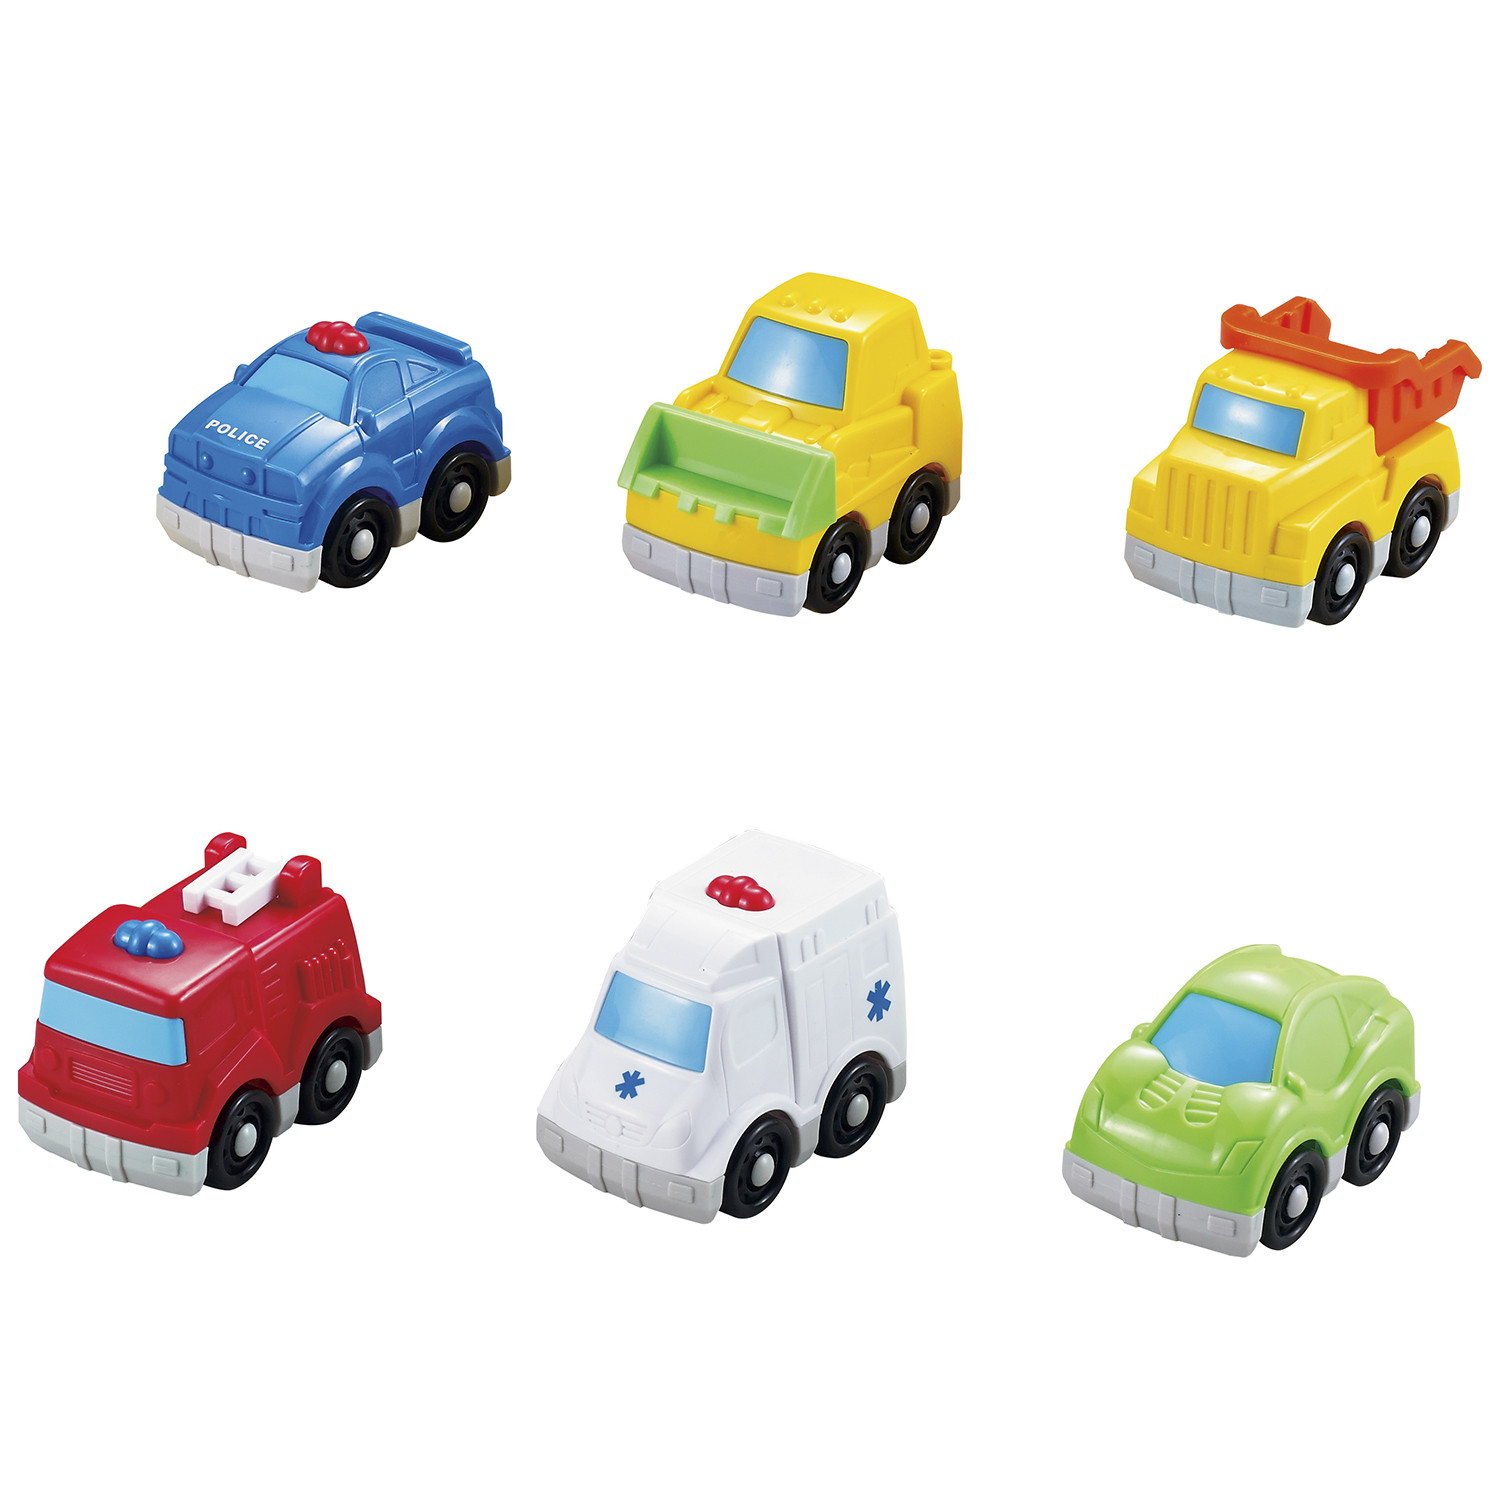 Infunbebe Mini Vehicles Toy 6 Pack Image